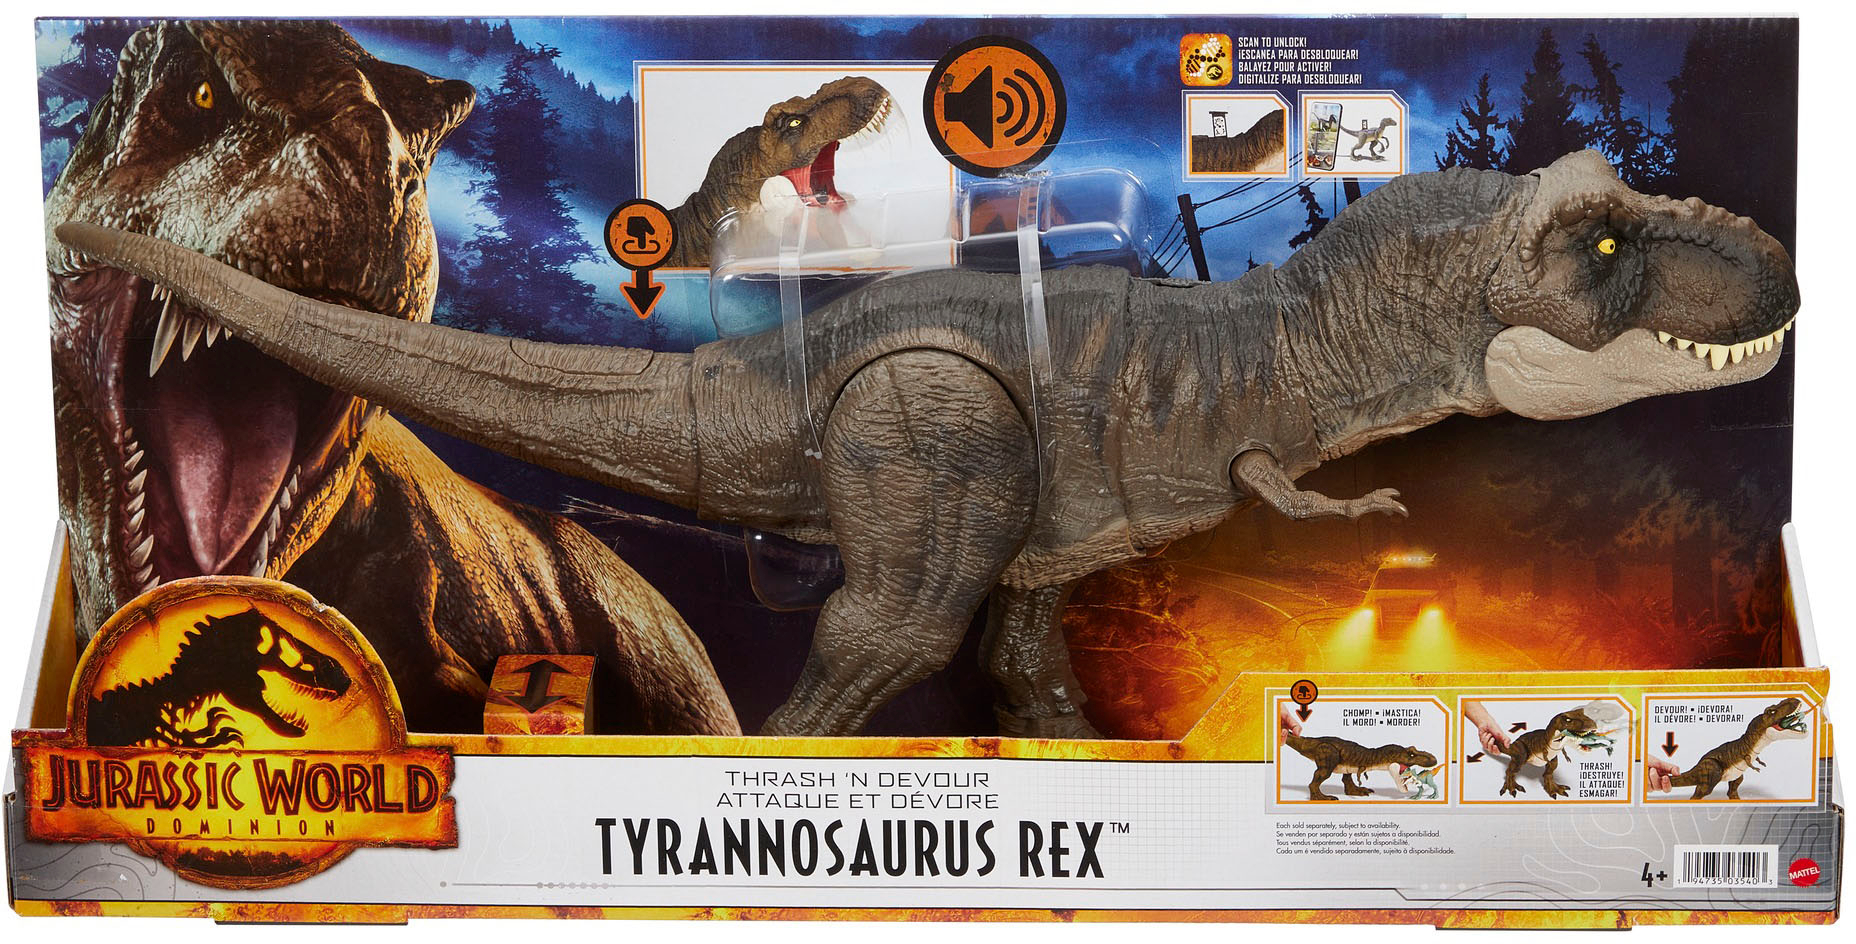 Angle View: Jurassic World Dominion Tyrannosaurus Rex Dinosaur Toy, Thrash N Devour Sound, Chomp Action